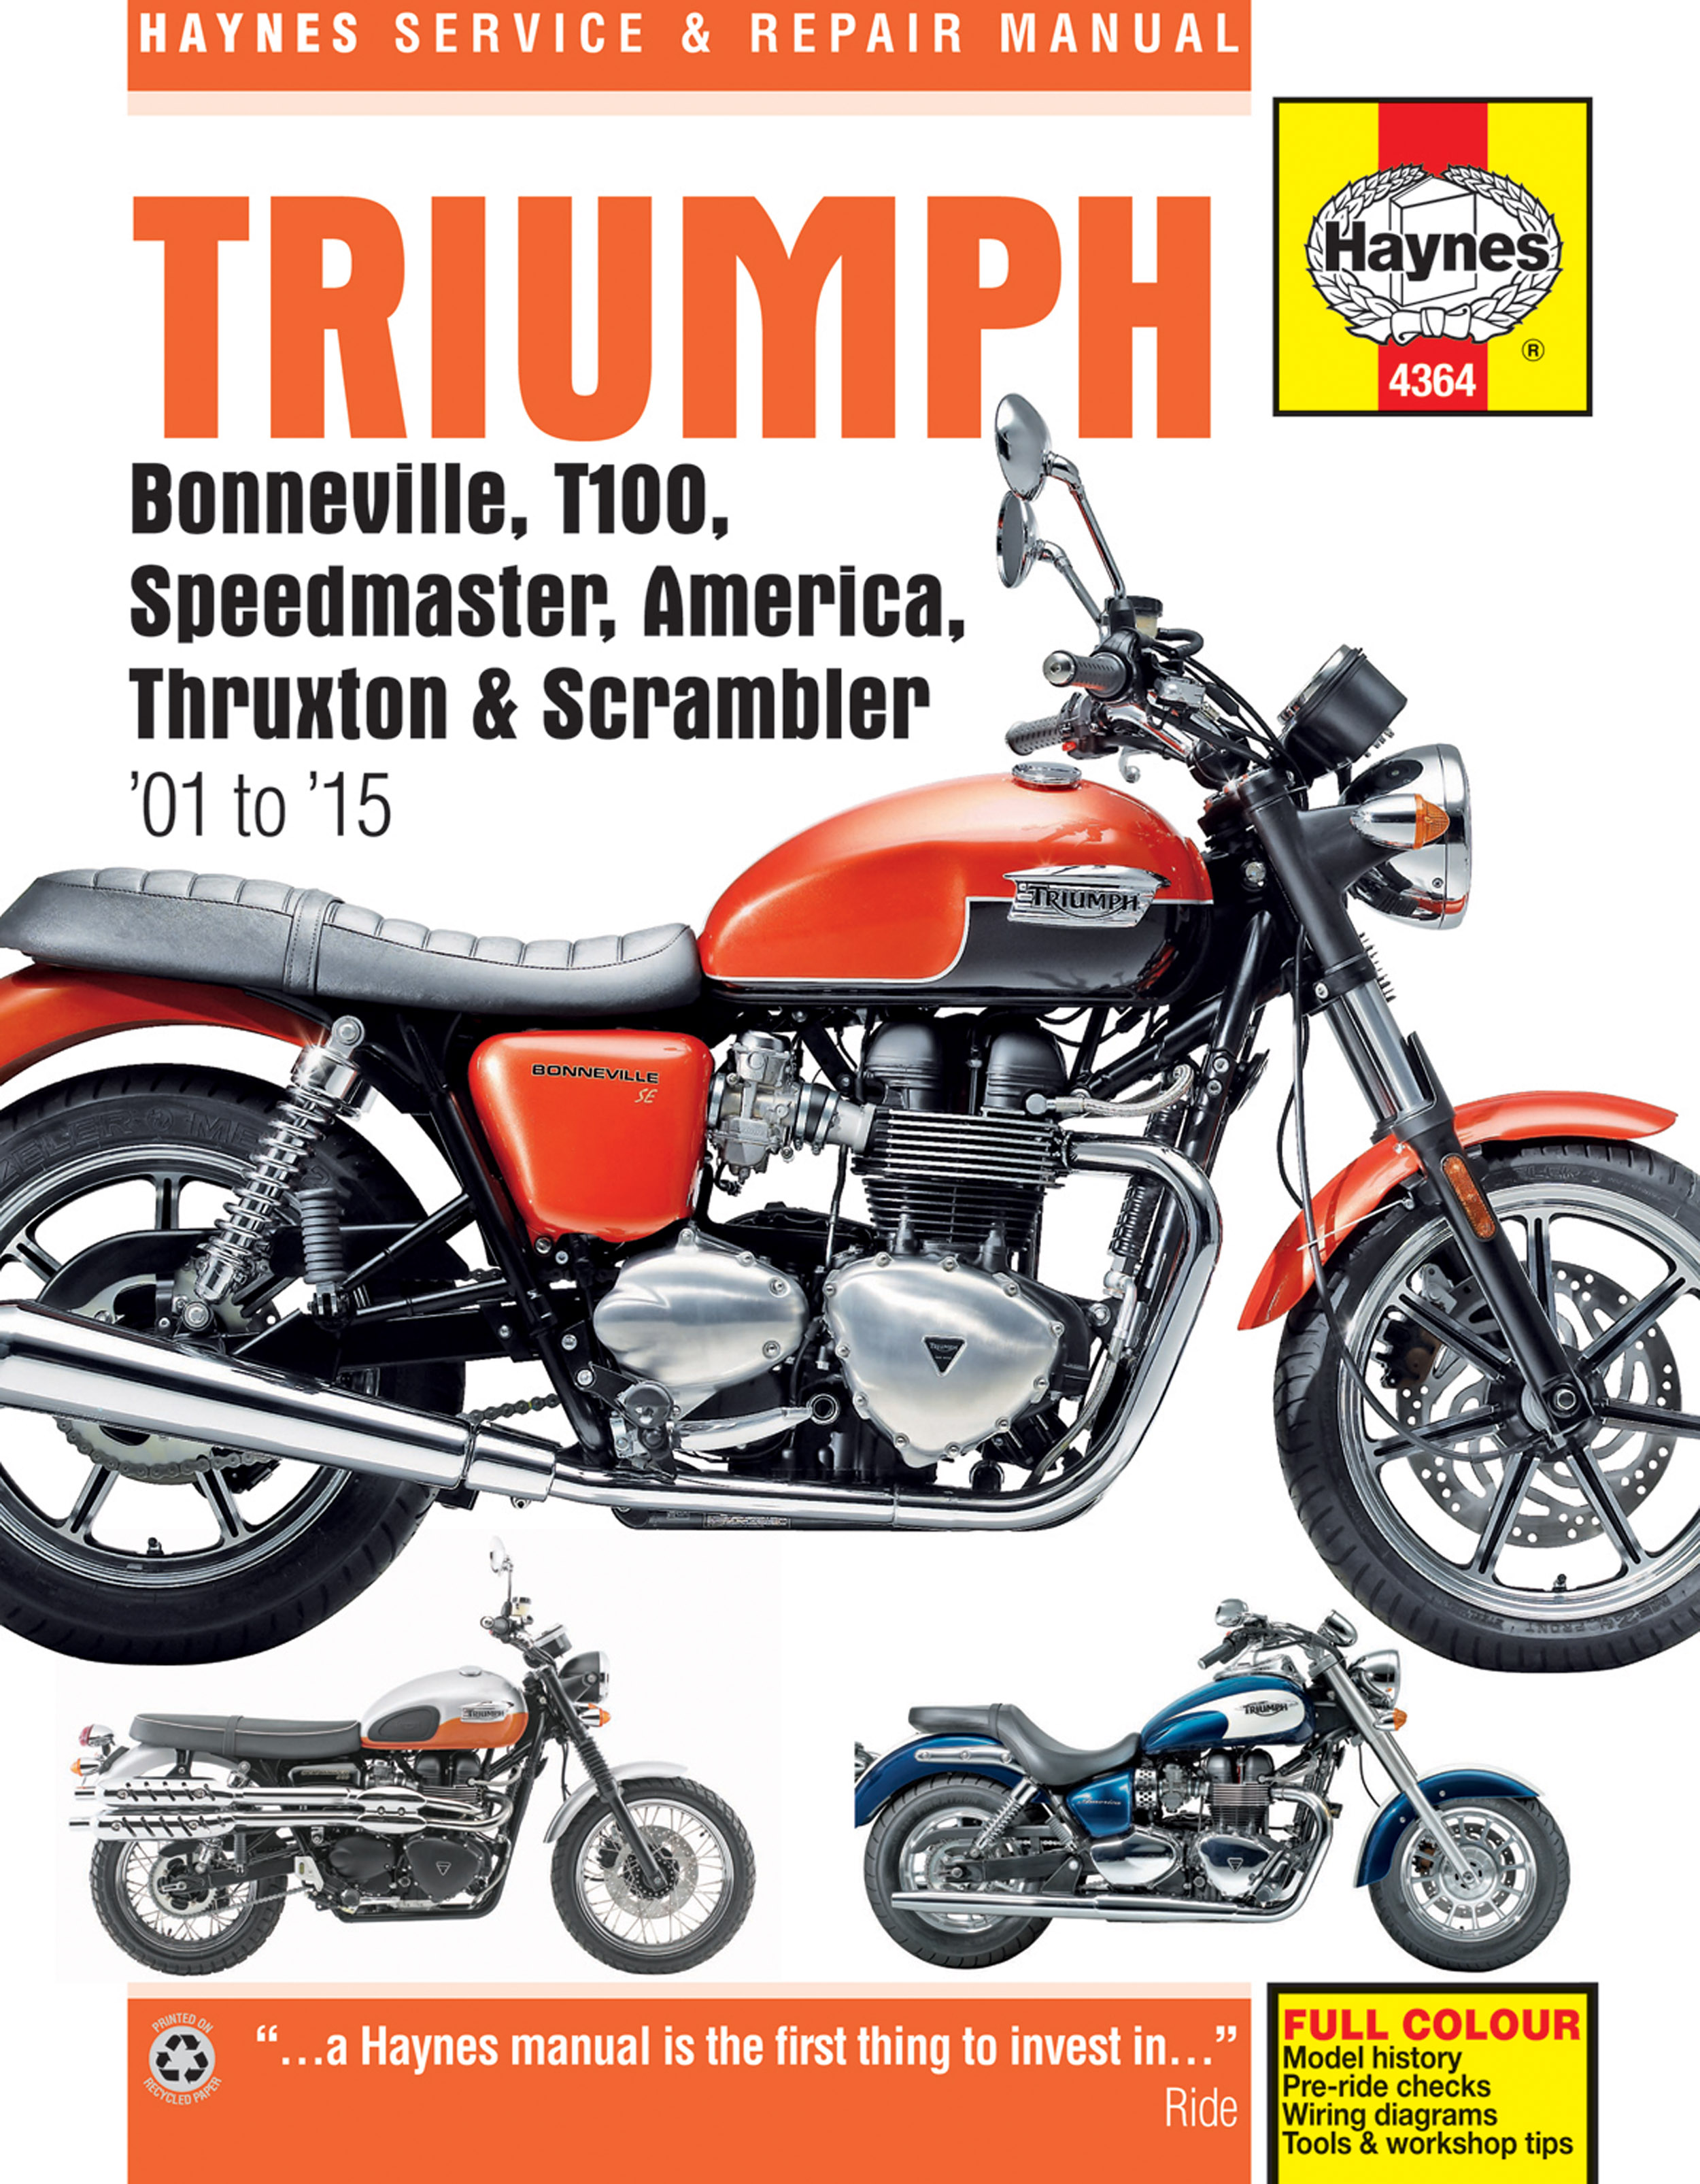 Triumph Bonneville, T100, Speedmaster, America, Thruxton & Scrambler (01-15) Haynes Repair Manual (See specific years covered)